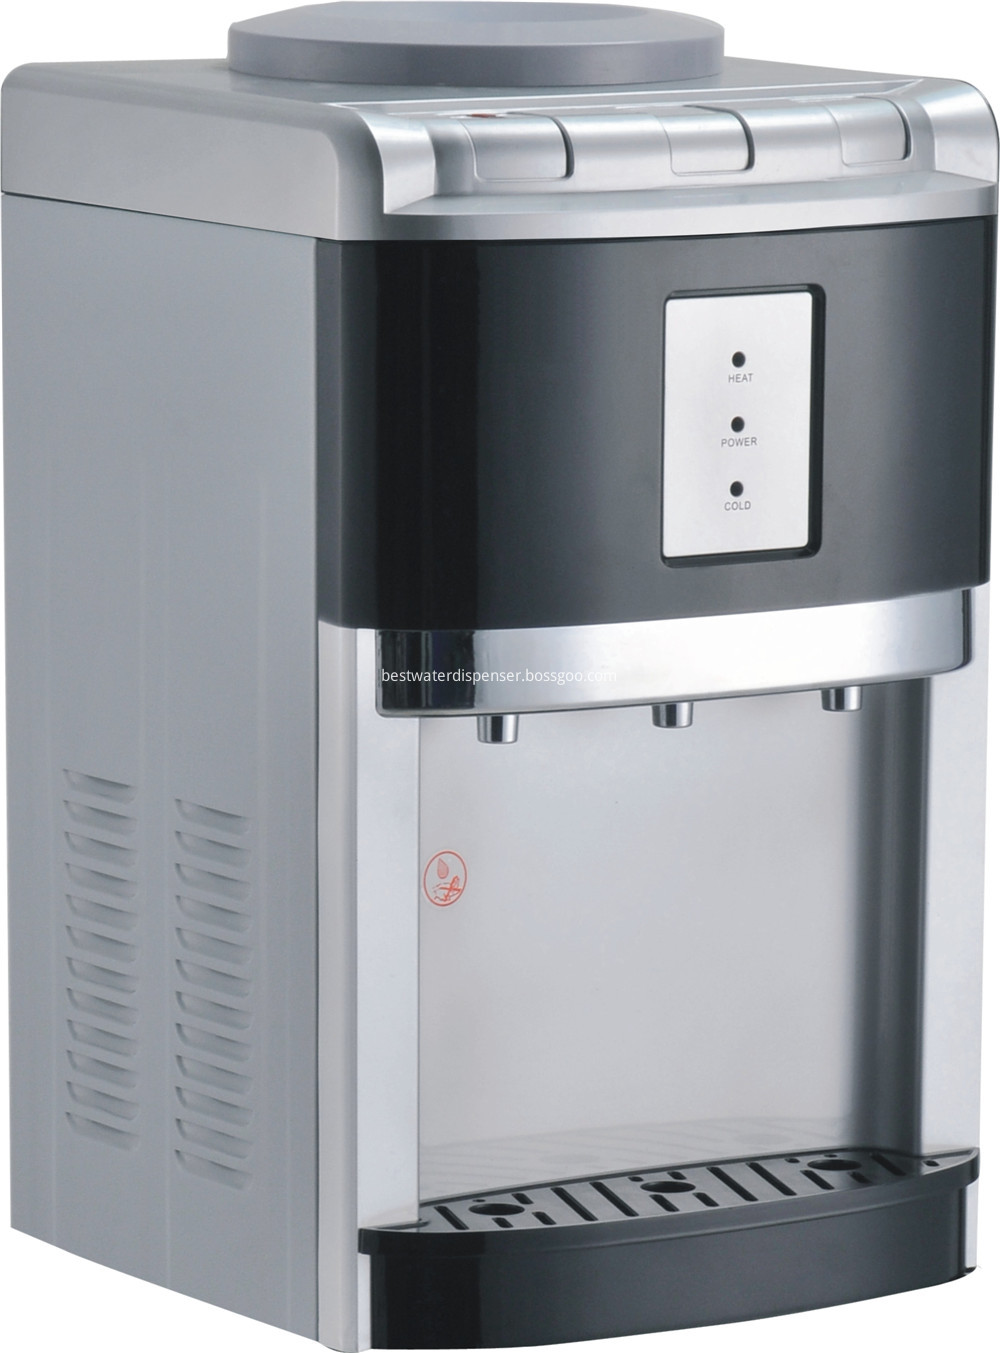 Table Type Water Cooler Dispenser